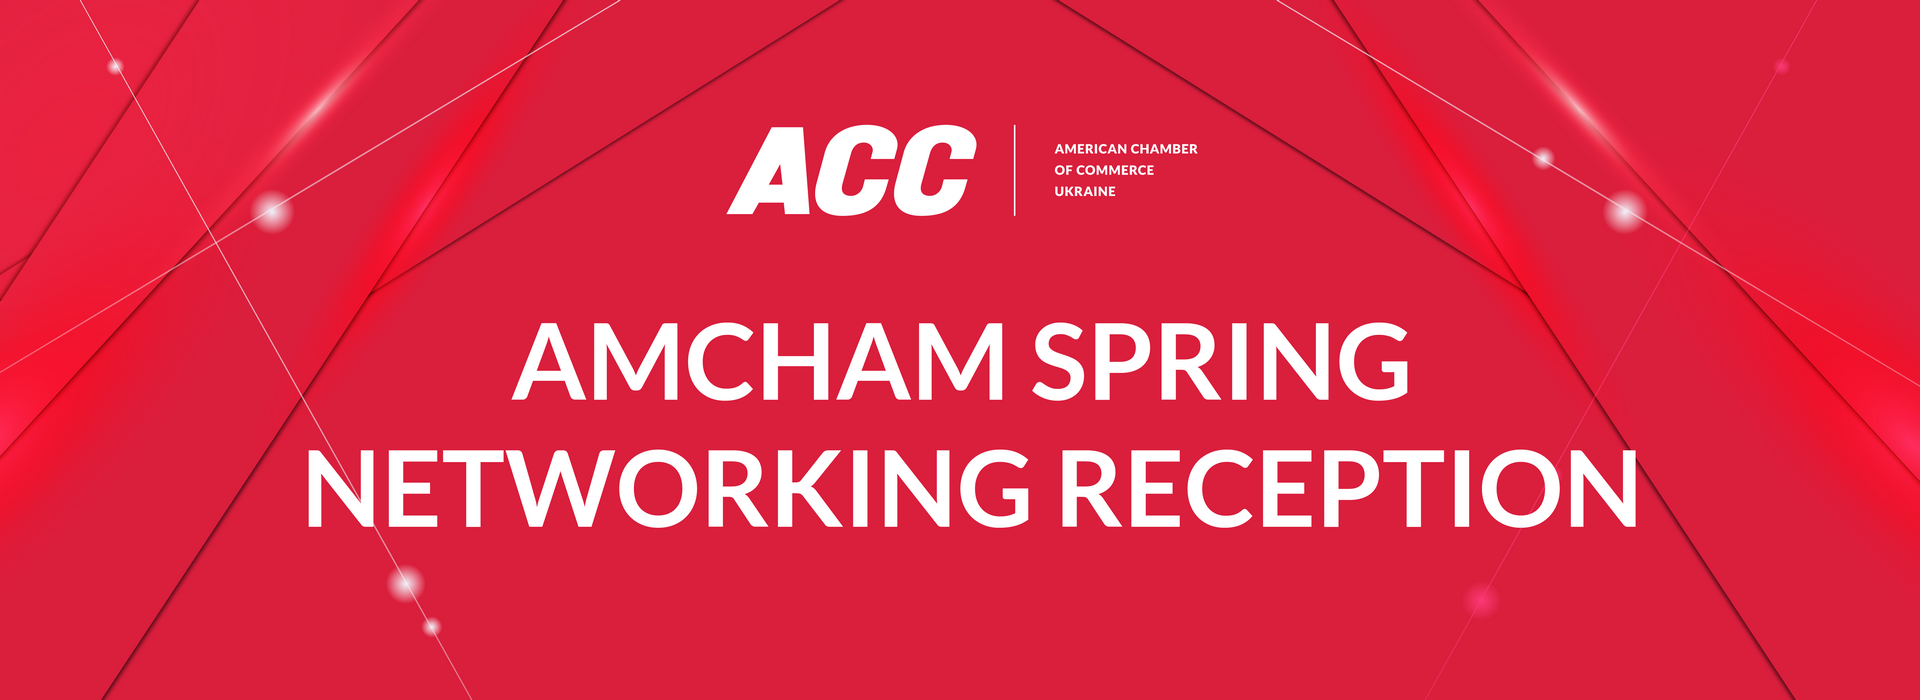 AmCham Spring Networking Reception